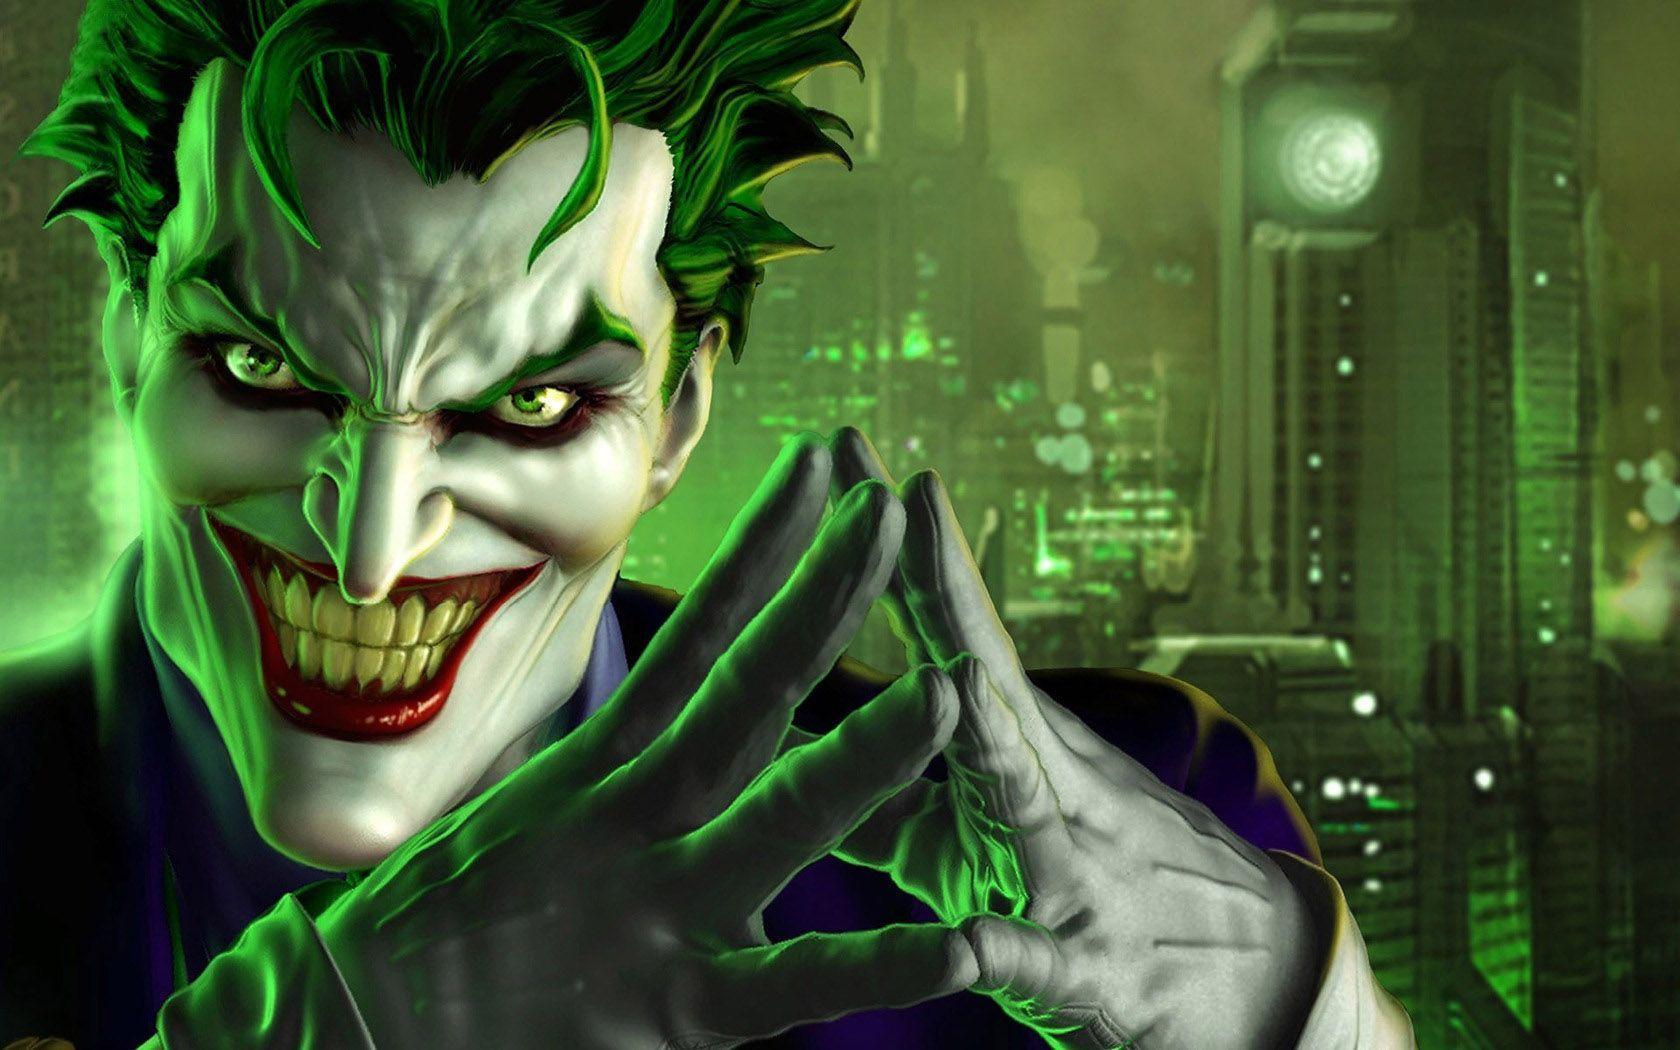 Unduh 81 Windows Wallpaper Themes Joker Gambar Gratis Terbaru - Posts.id